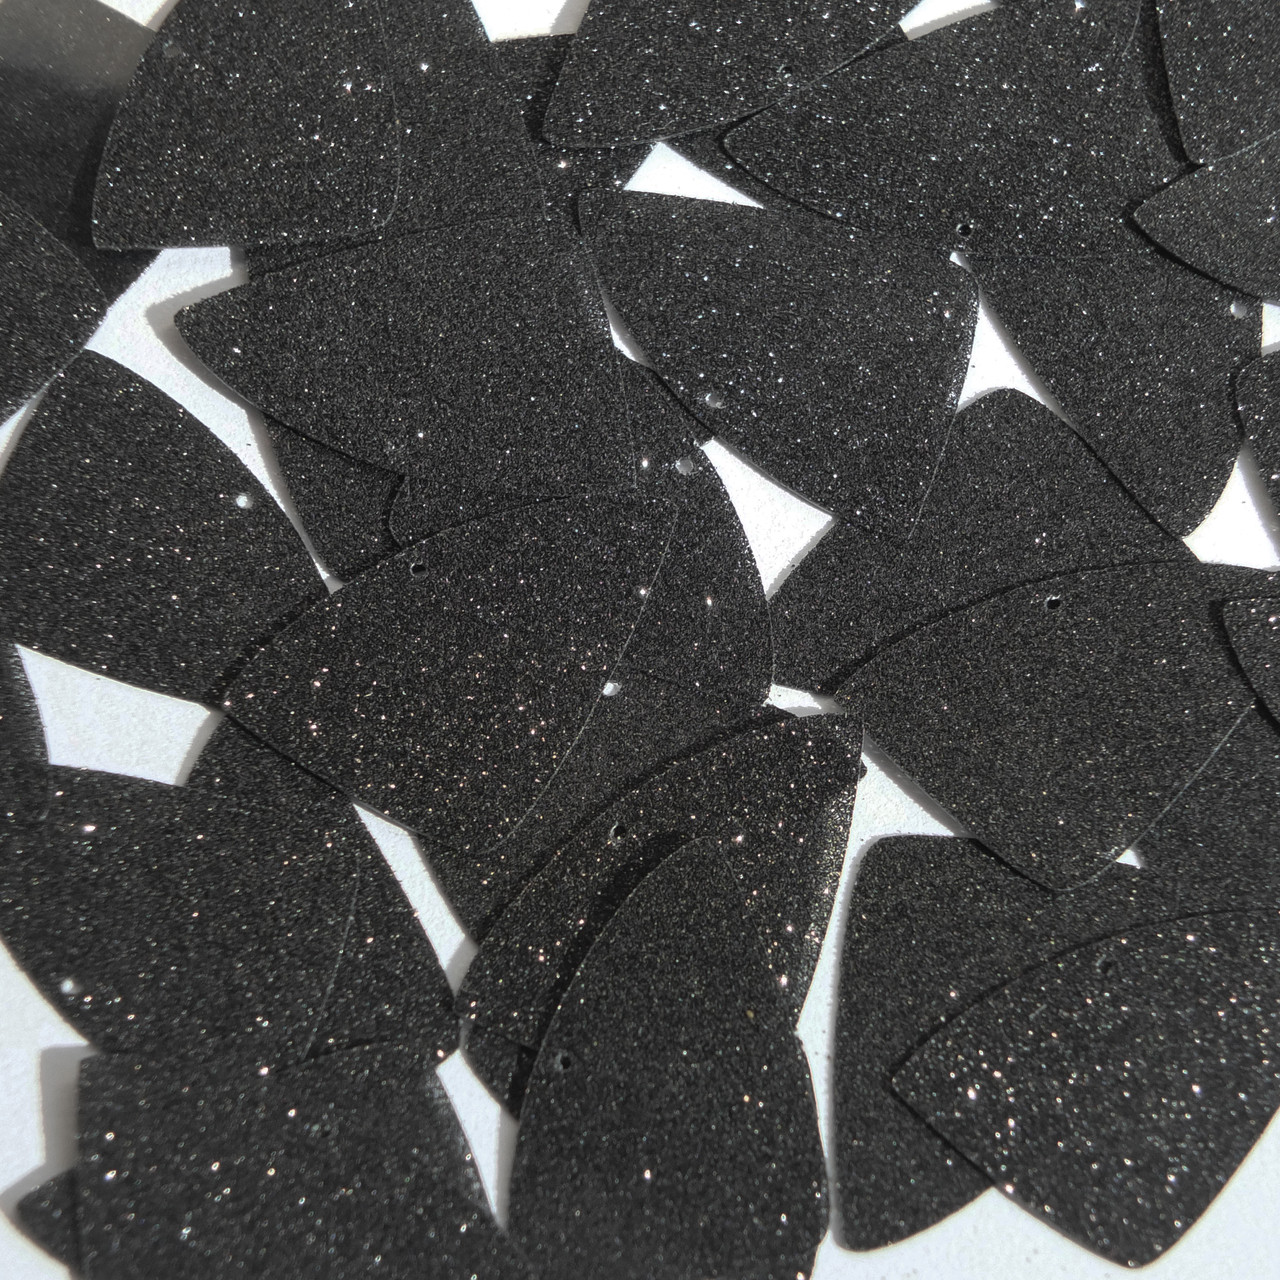 Fishscale Fin Sequin 1.5" Black Metallic Sparkle Glitter Texture